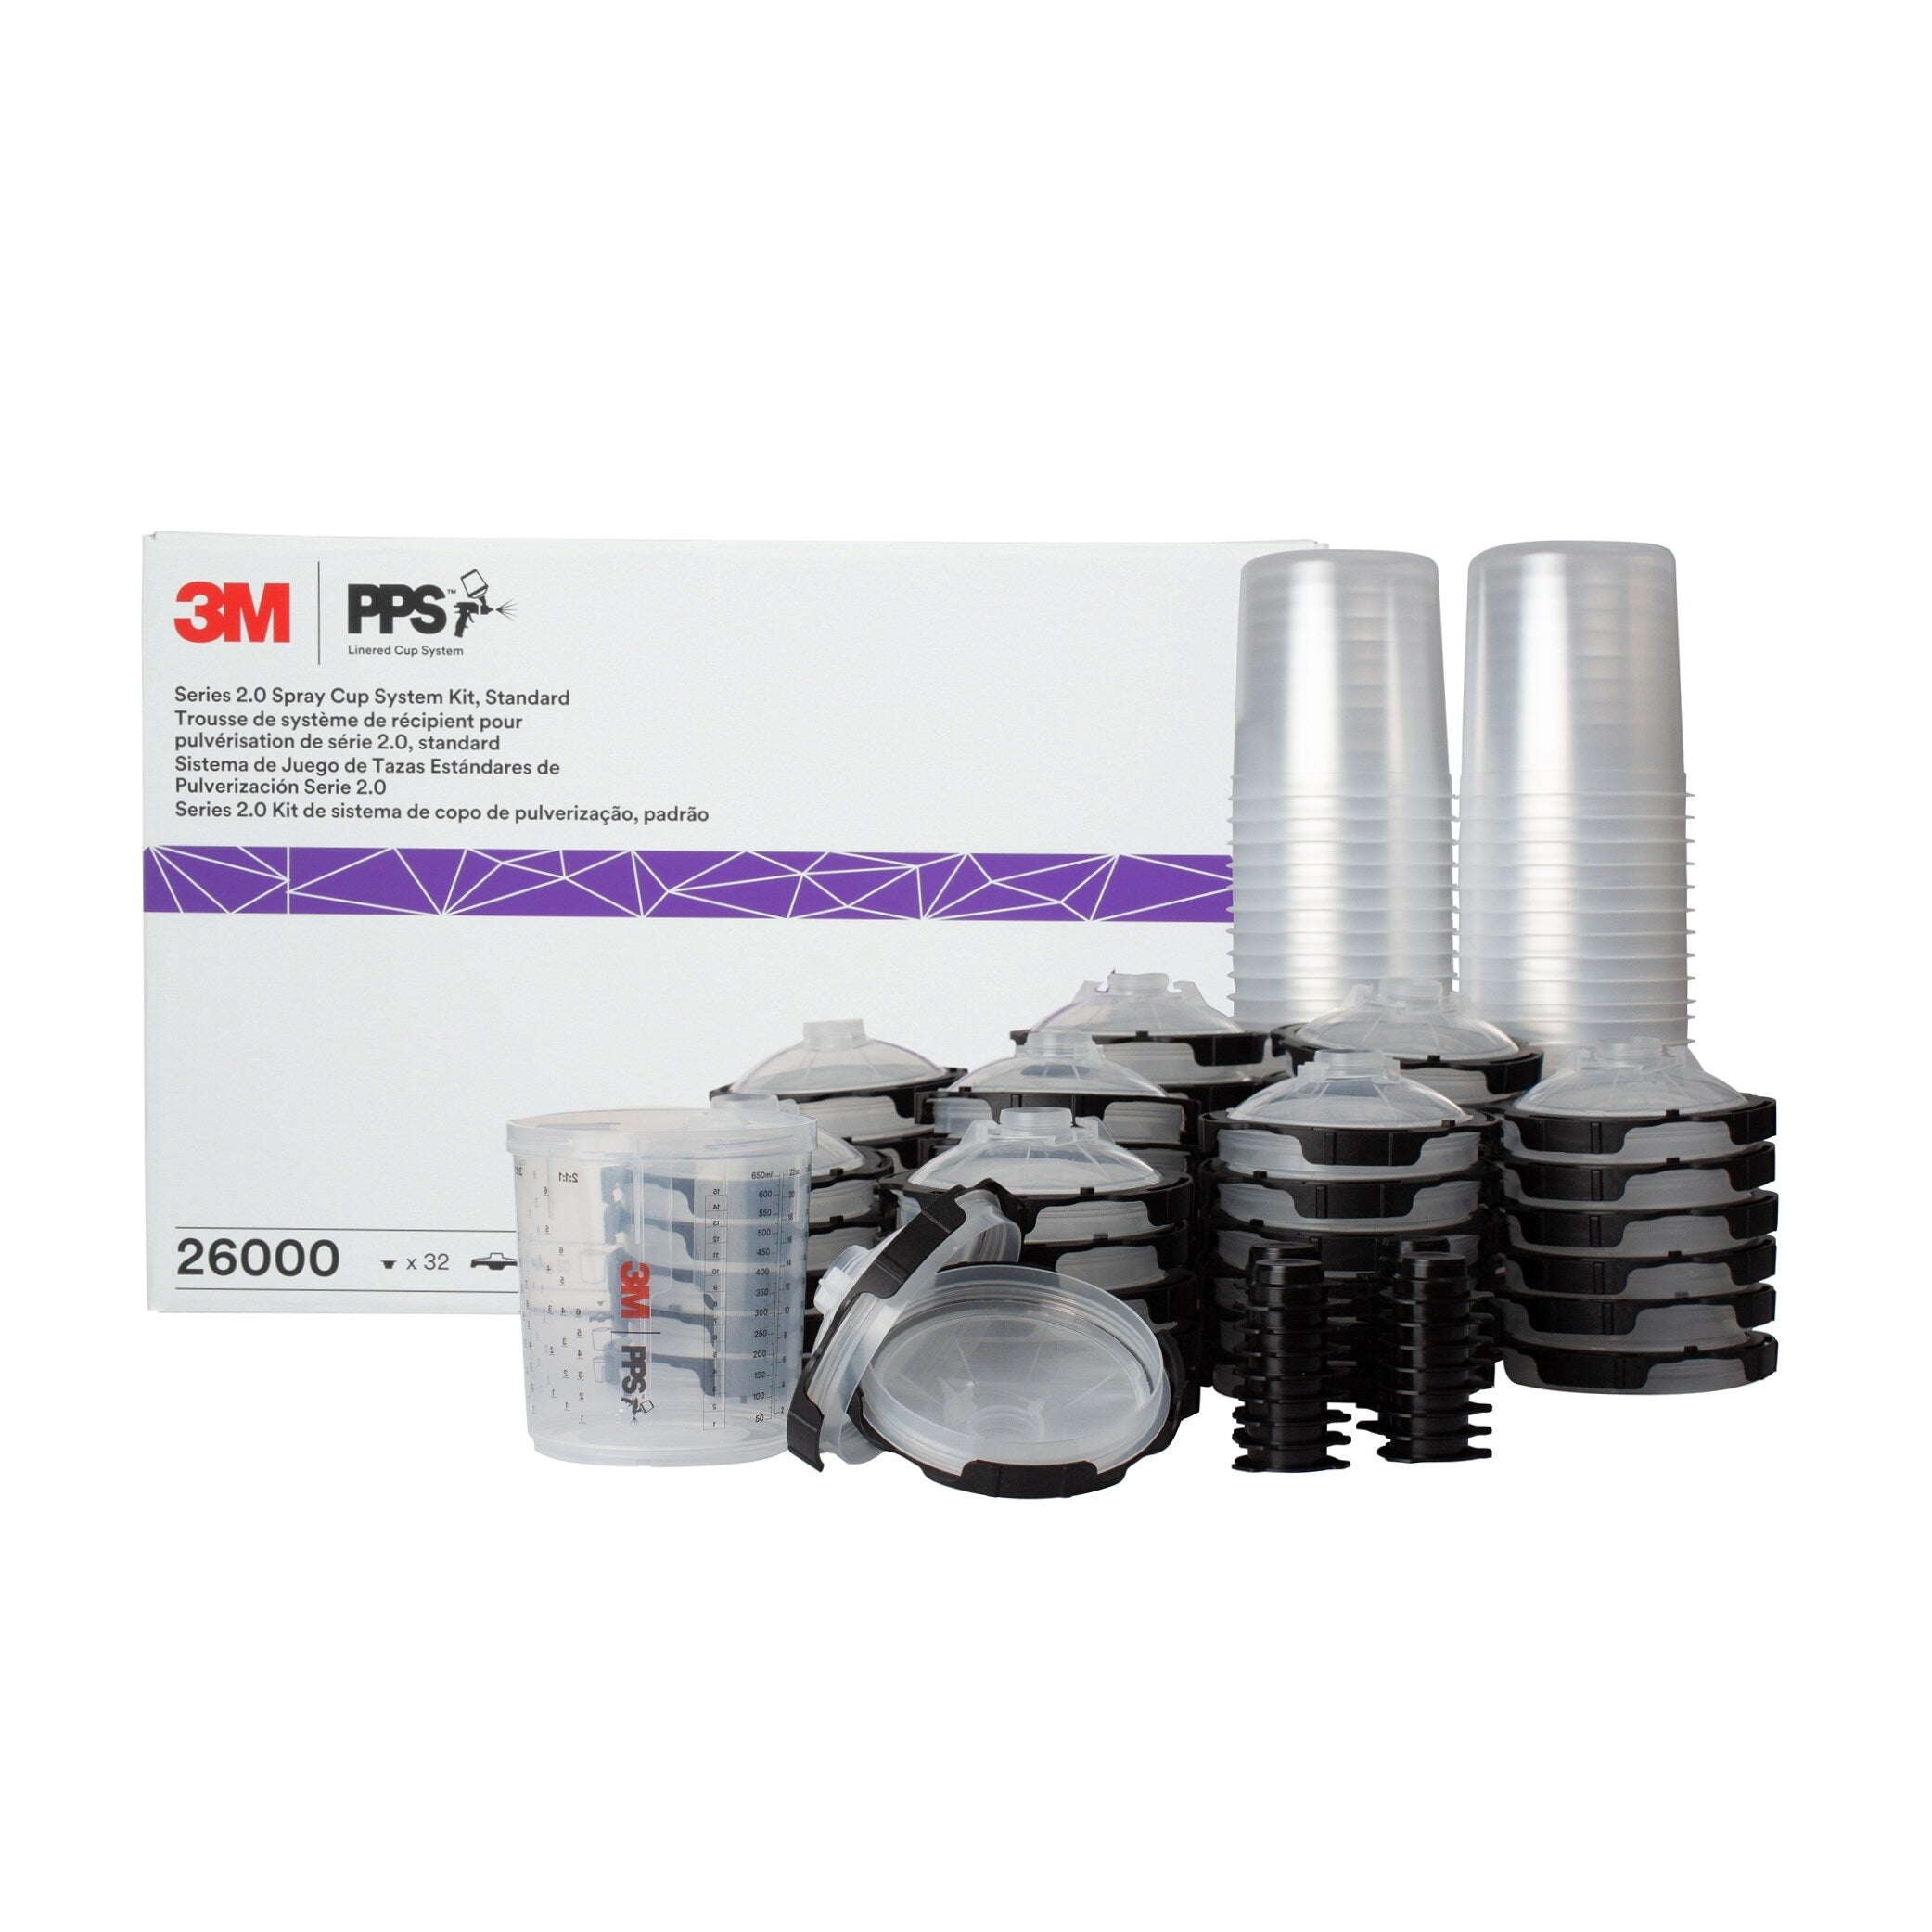 3M™ PPS™ Series 2.0 Spray Cup System Kit 26000, Standard 22 fl oz, 50 Per